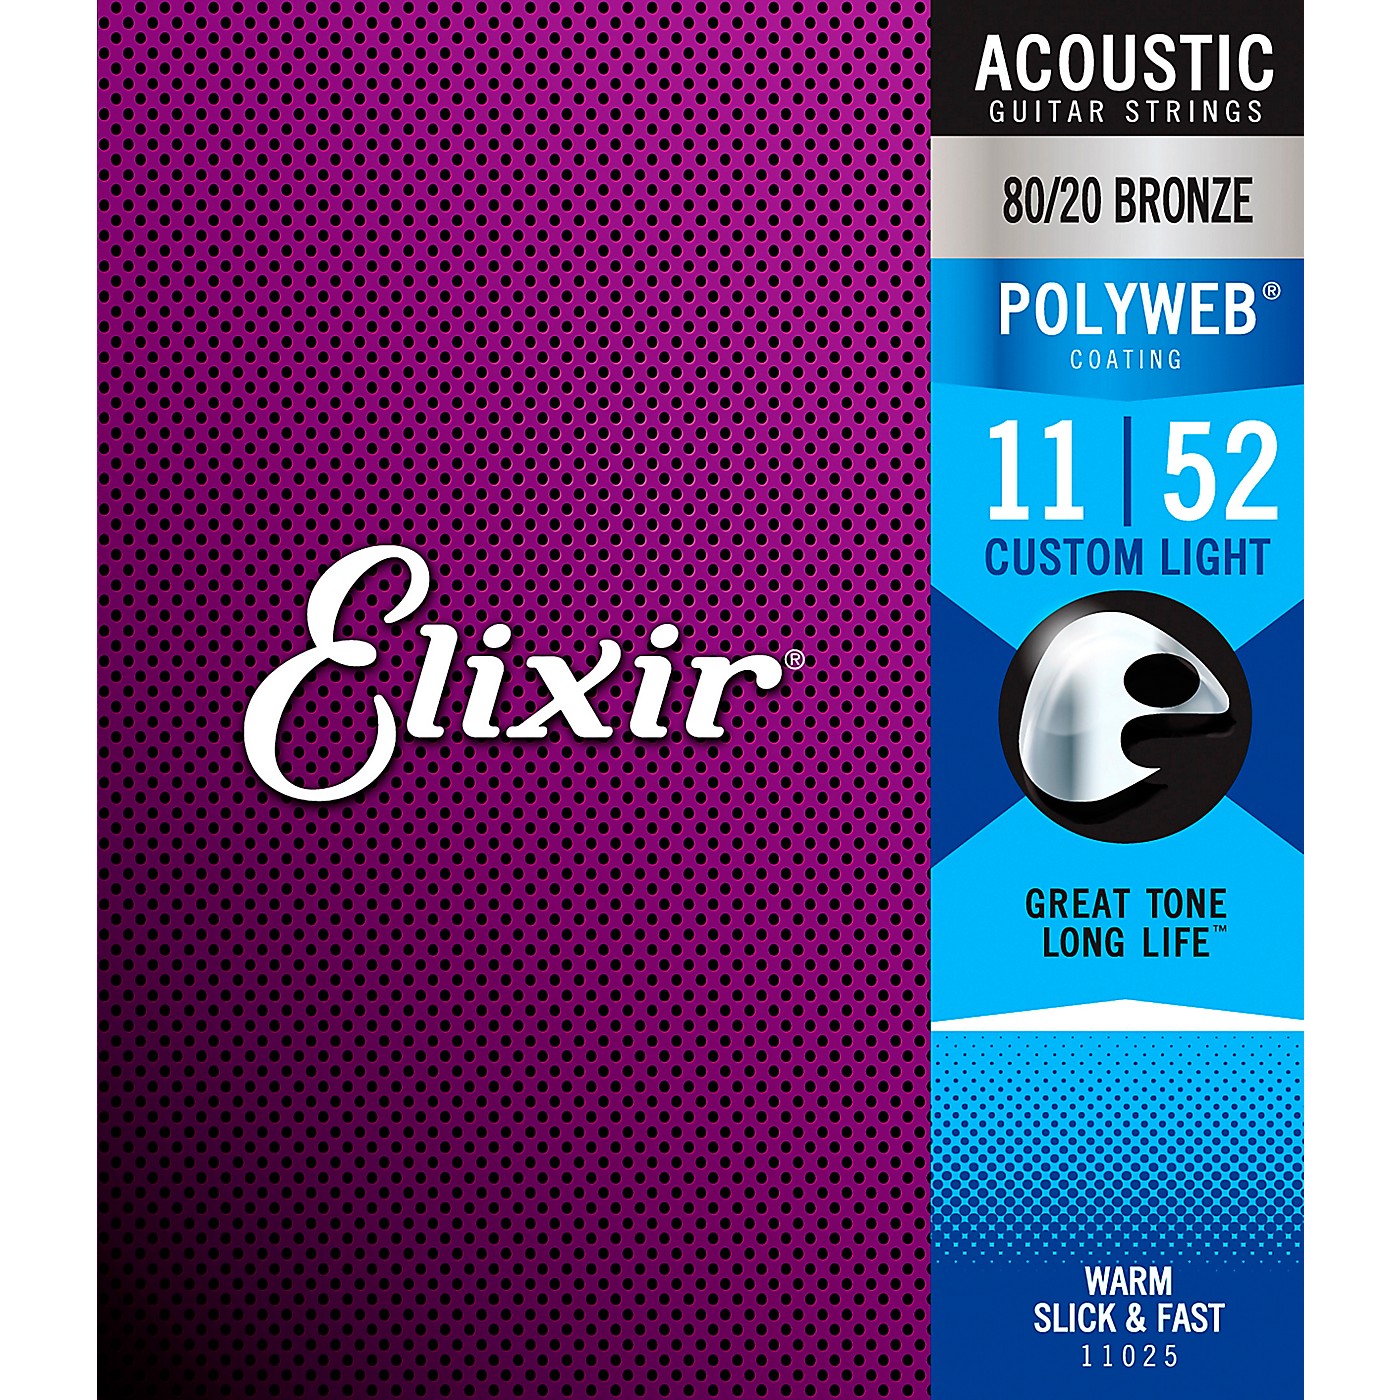 Elixir 80/20 Bronze Acoustic Guitar Strings with POLYWEB Coating, Custom Light (.011-.052) thumbnail